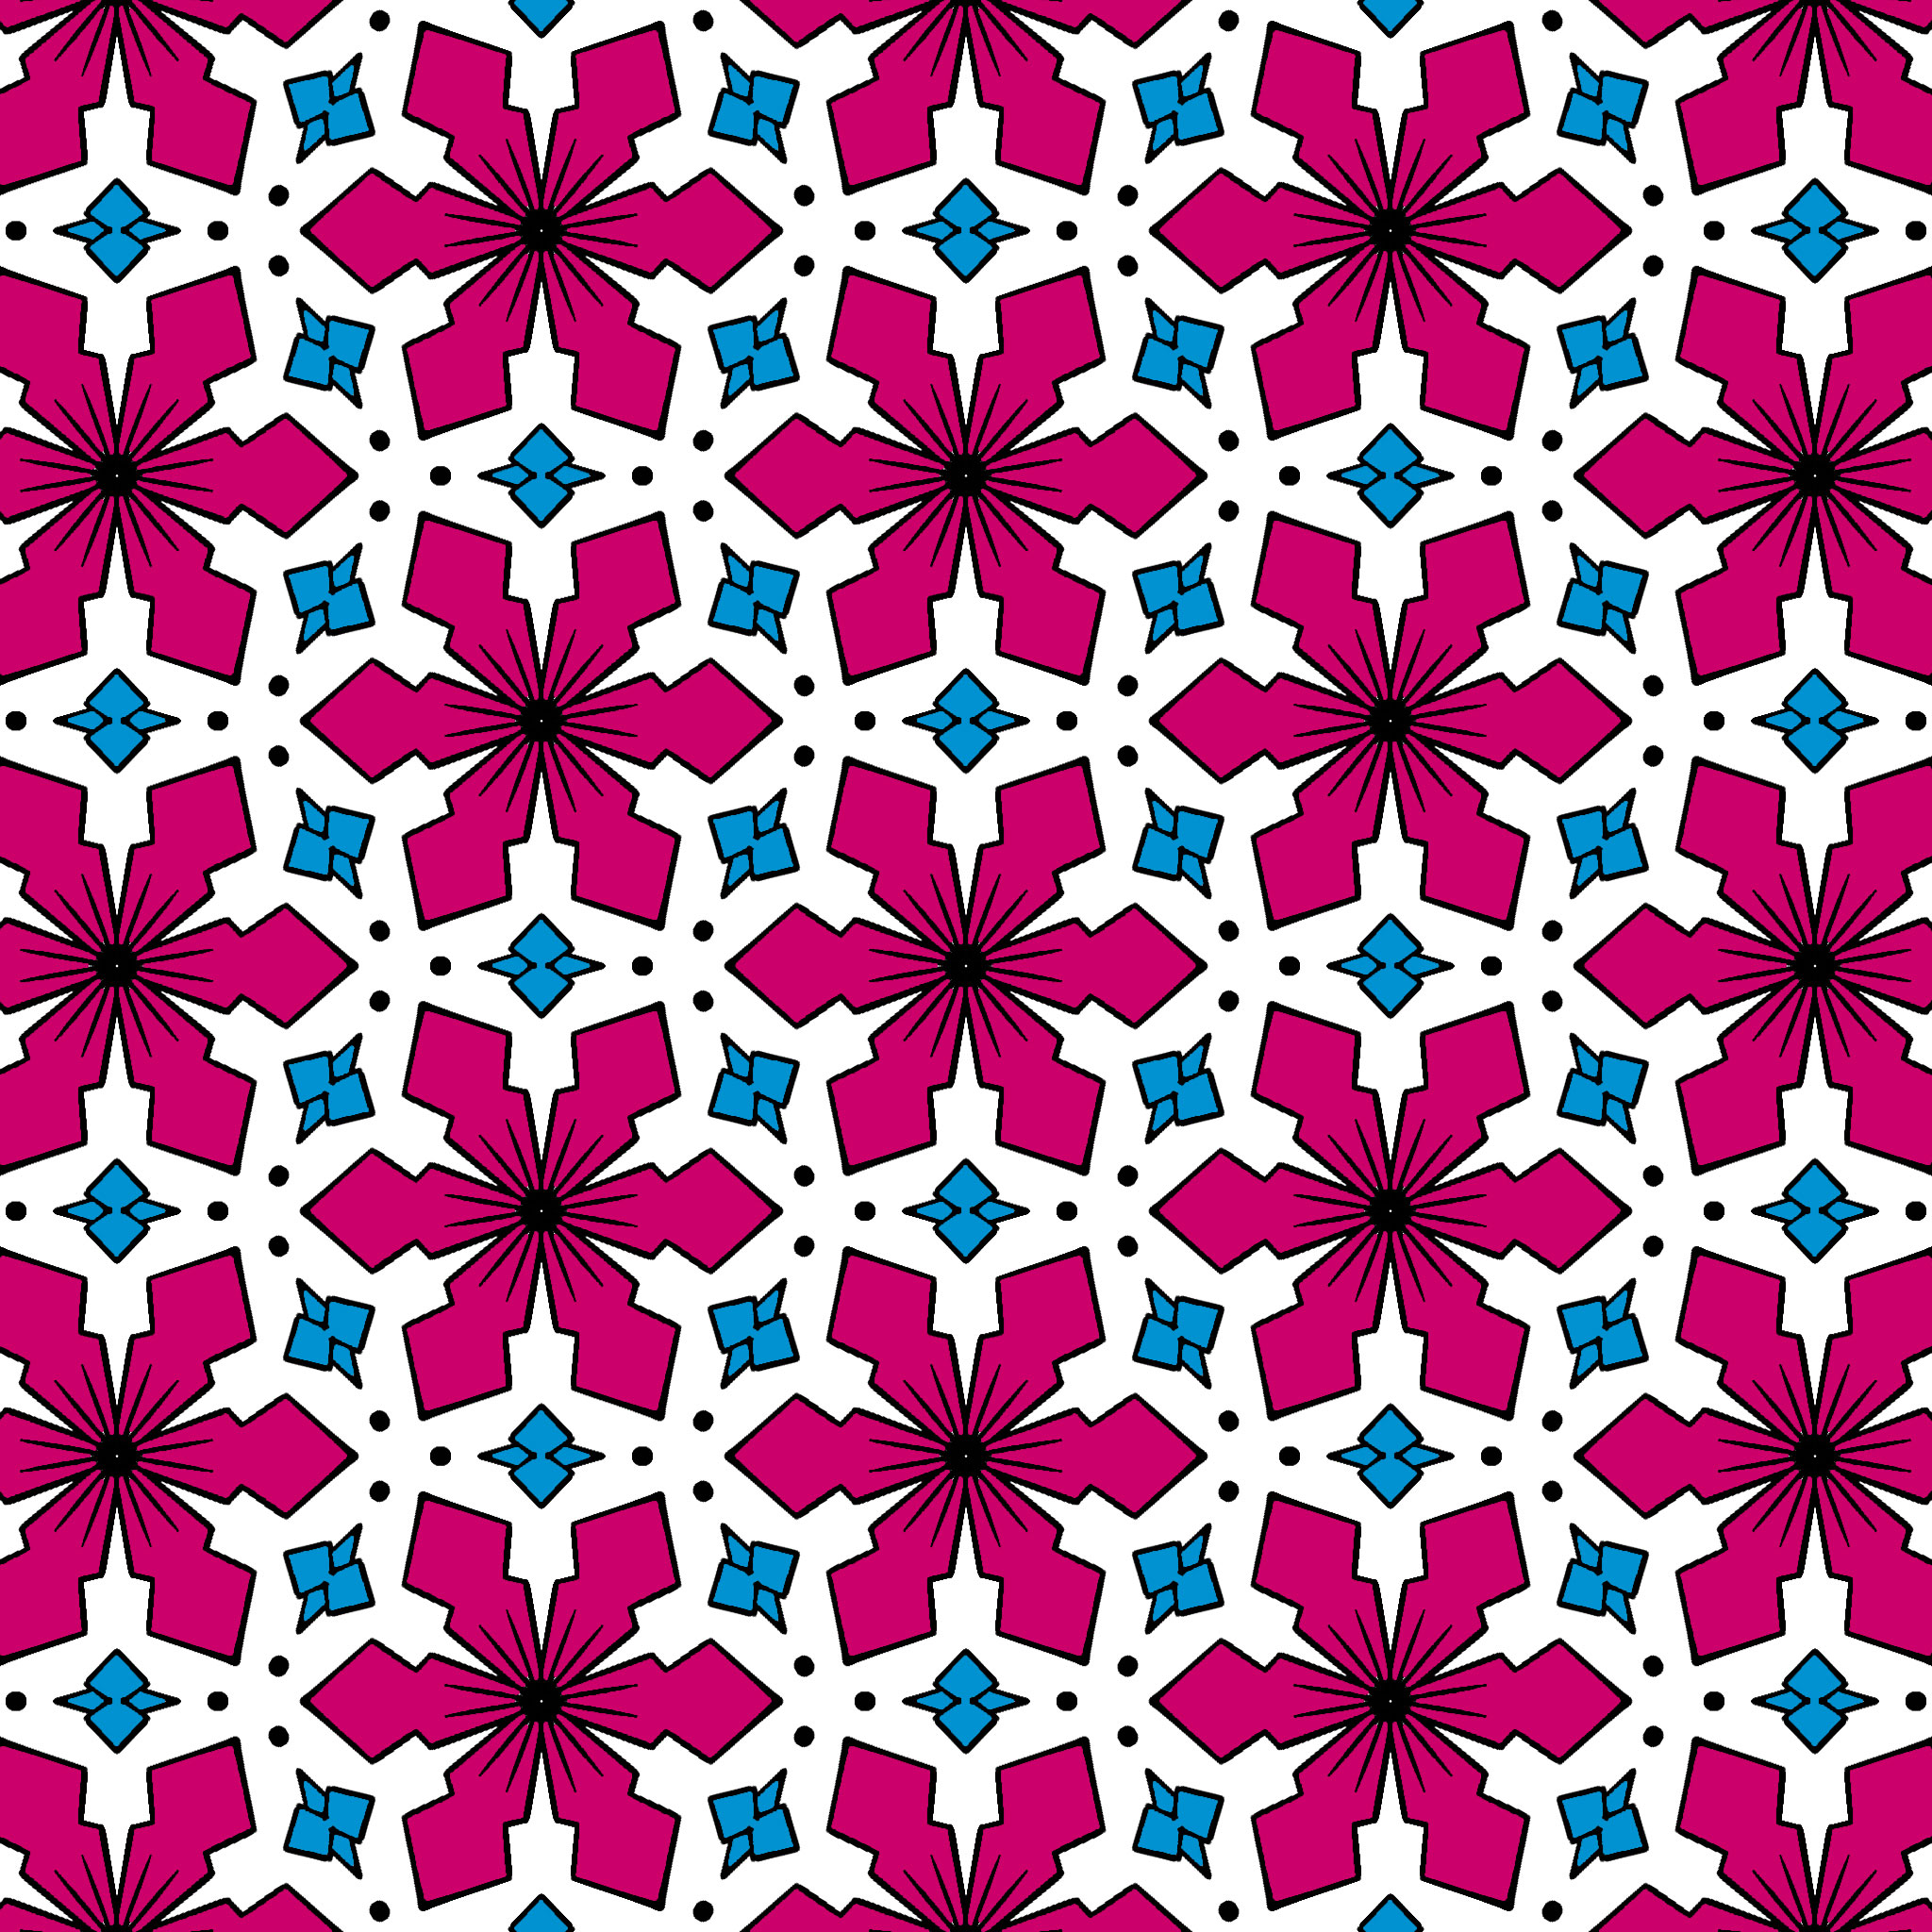 pink flower pattern background free download